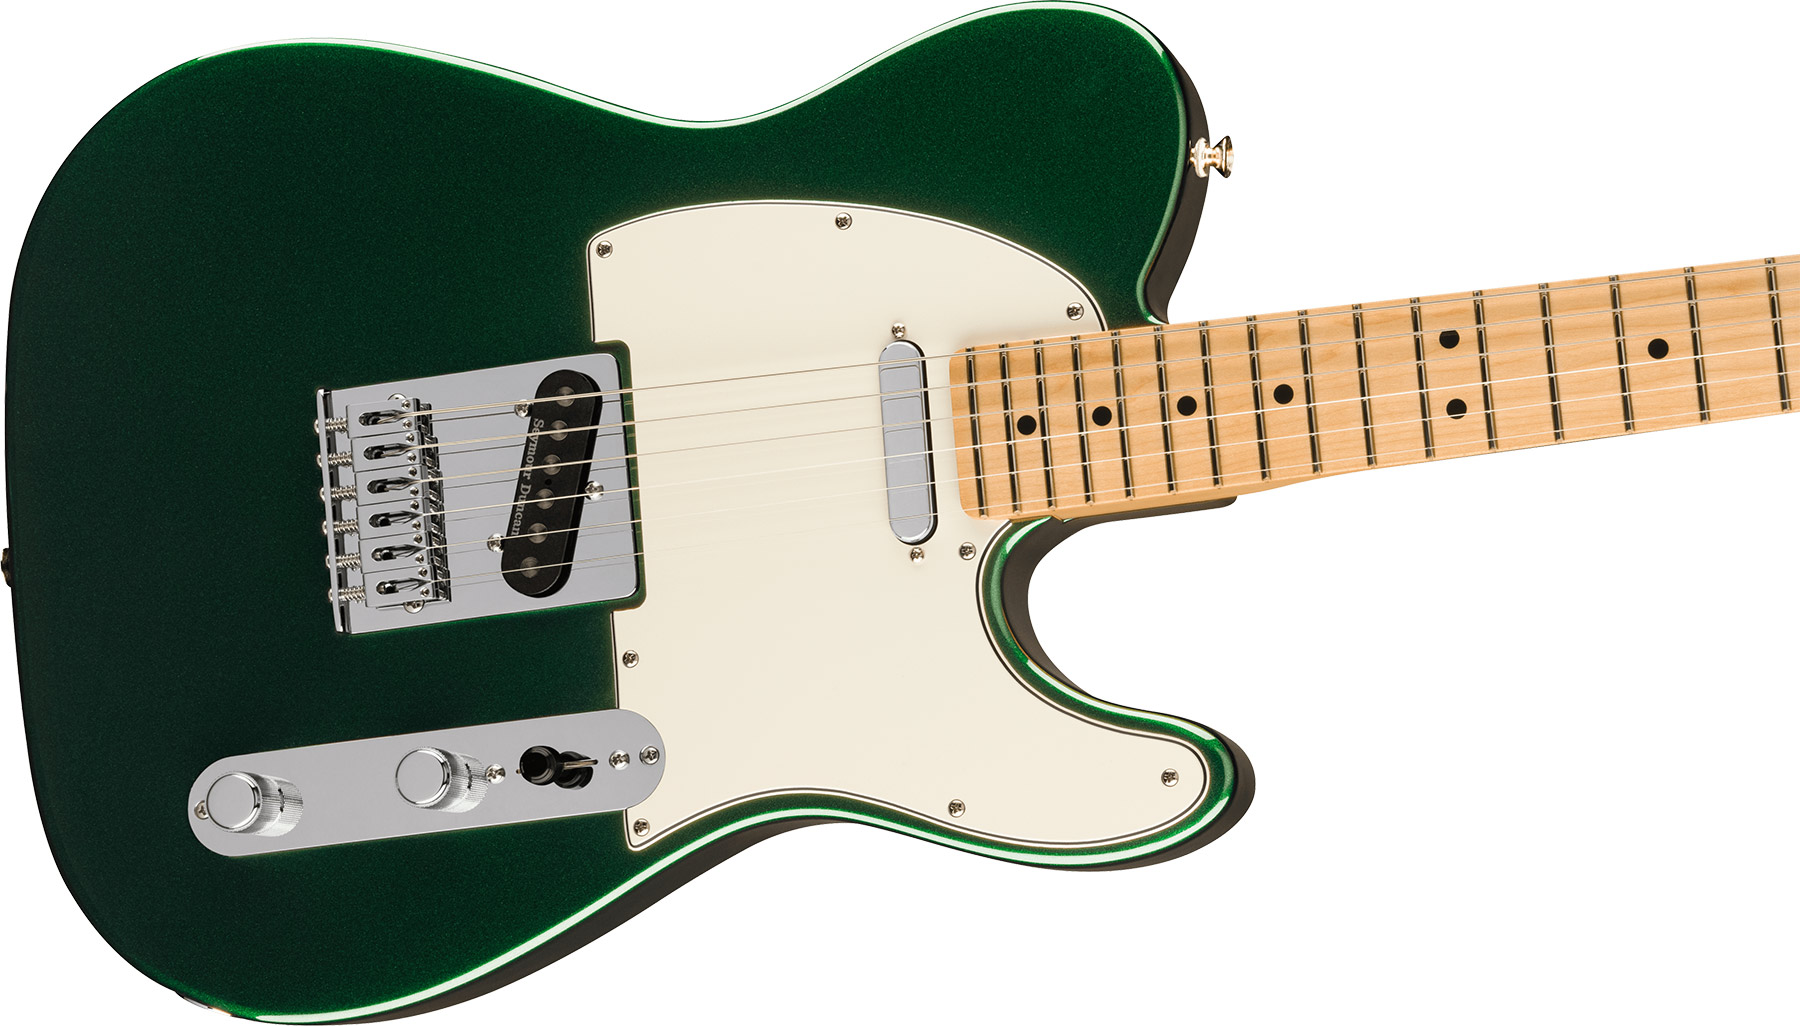 Fender Tele Player Ltd Mex 2s Seymour Duncan Mn - British Racing Green - Televorm elektrische gitaar - Variation 2